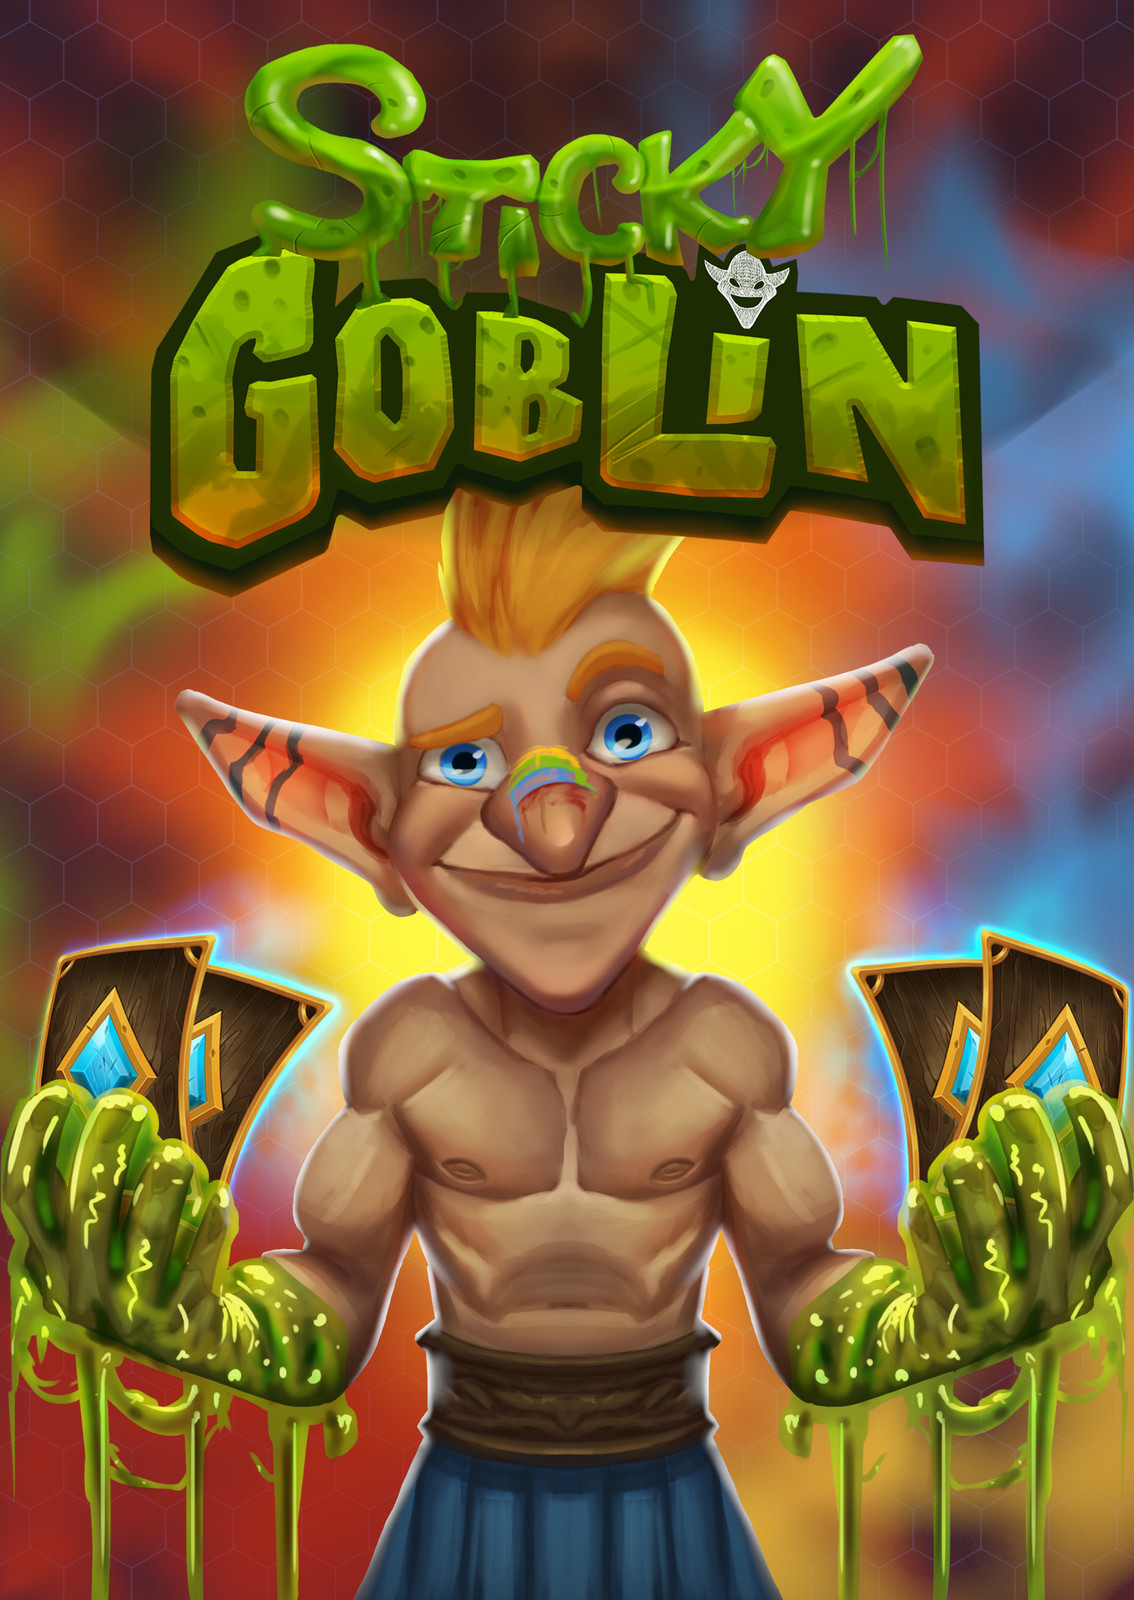 Sticky Goblin Card Game